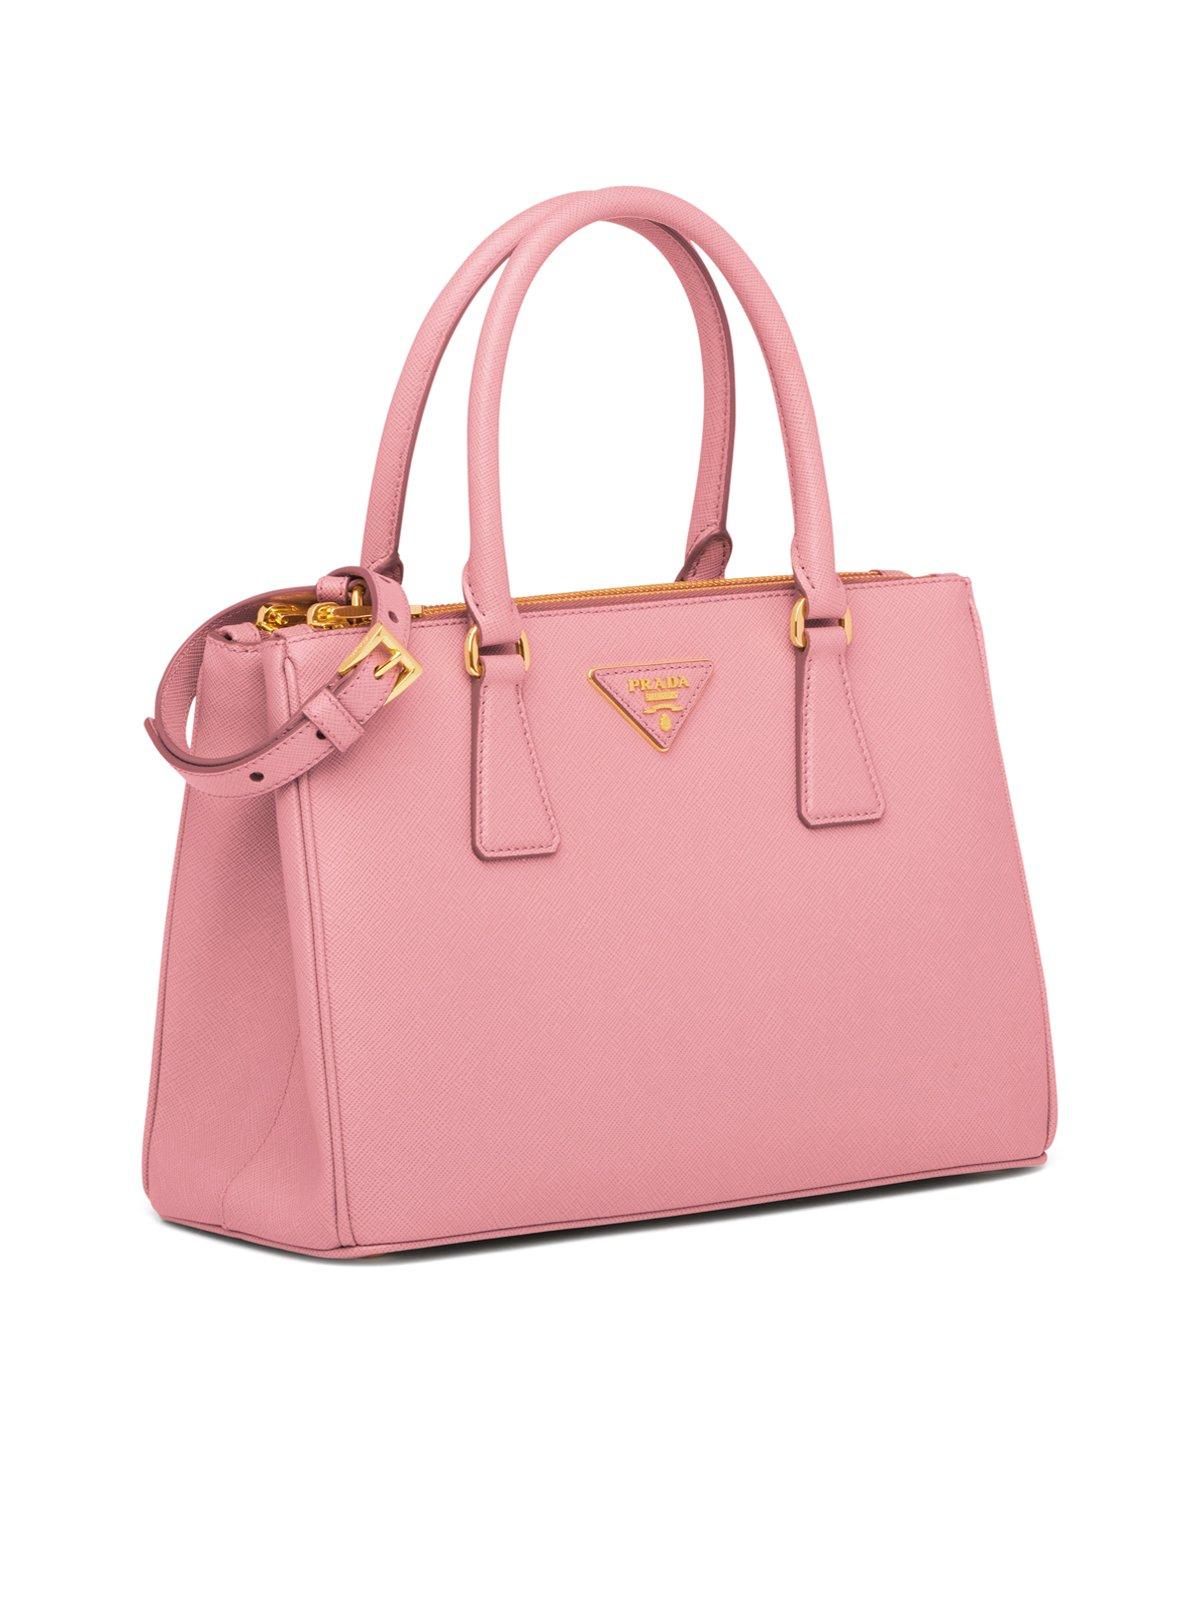 Prada Galleria Saffiano Leather Mini-bag in Pink | Lyst